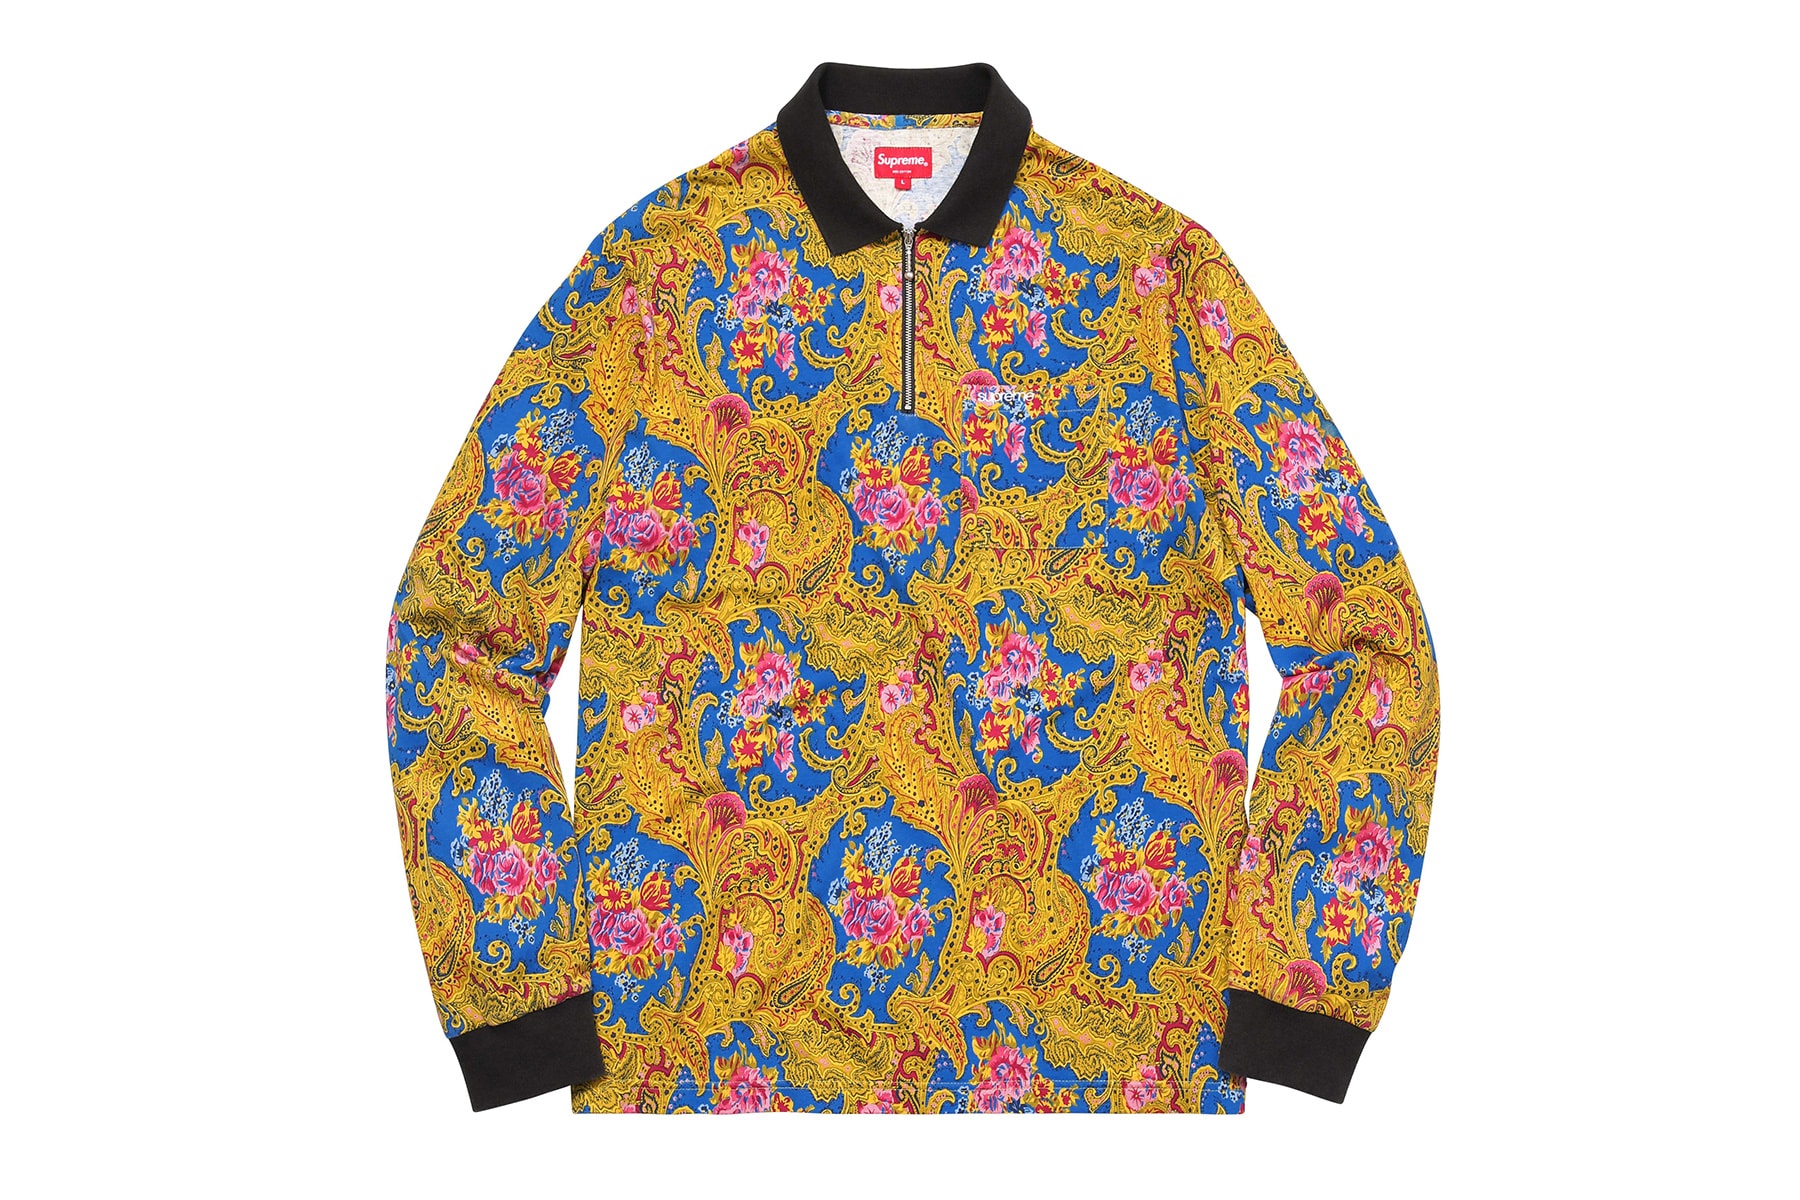 Supreme 2017年秋冬コレクション トップス 注目のベロア素材を採用したピースやスポーツタイプのウェアが色鮮やかな配色でラインアップ ワークシャツ カウチン ニット ポロシャツ フットボールシャツ ロングスリーブ 長袖 シュプリーム